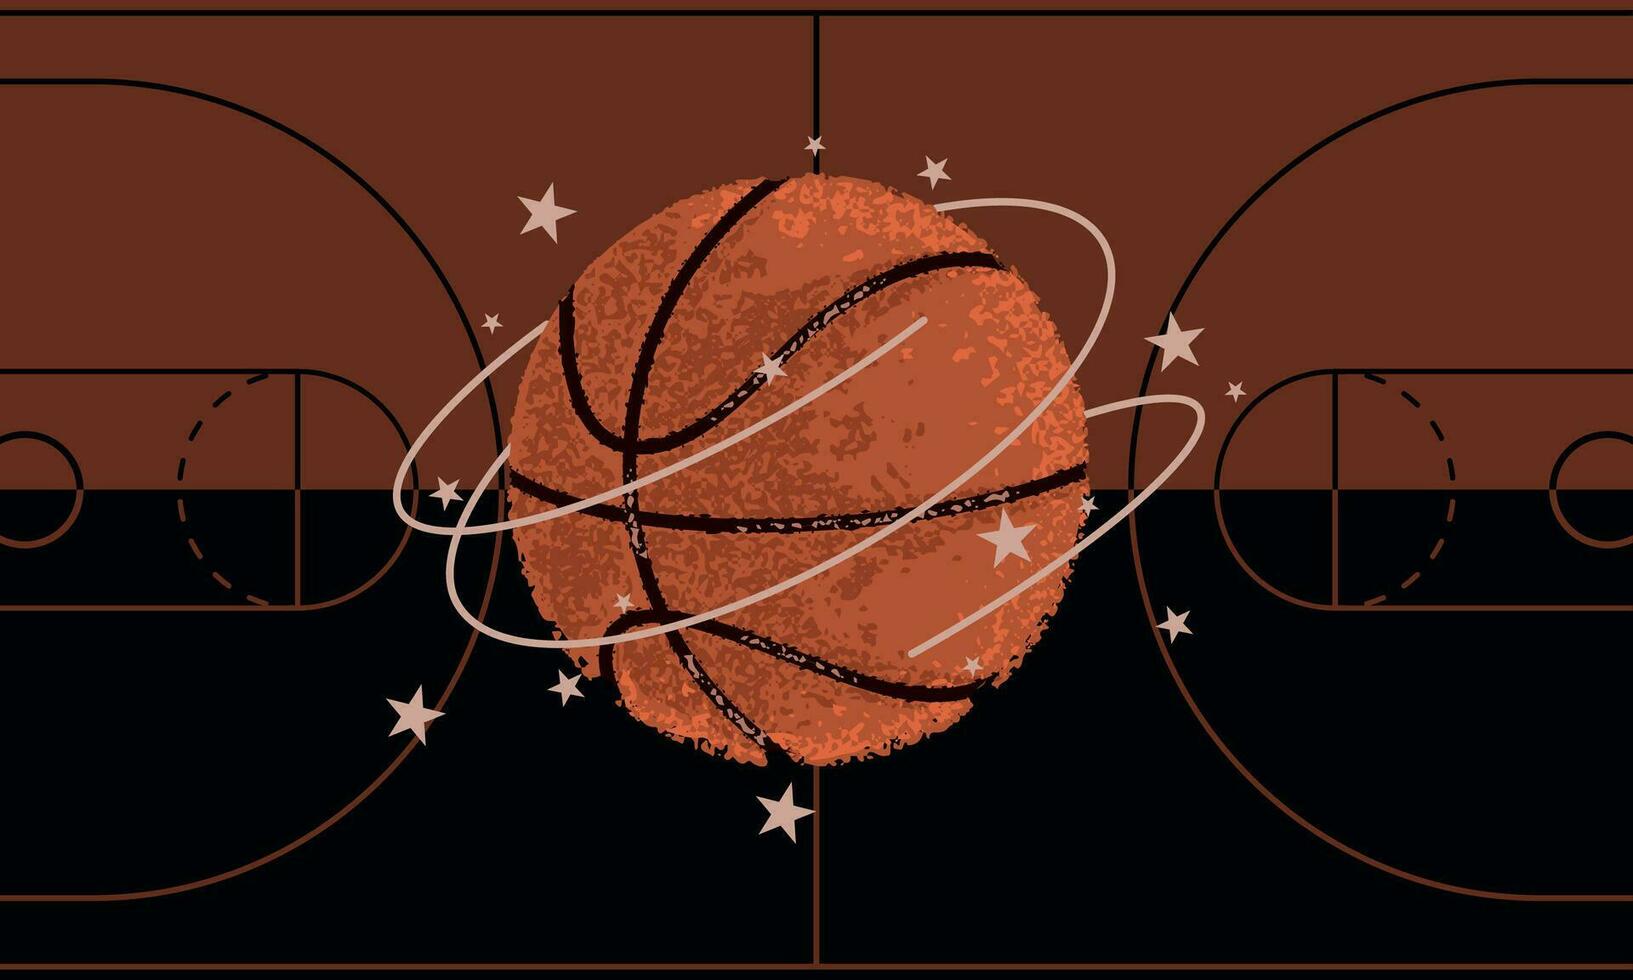 färgad basketboll grunge affisch vektor